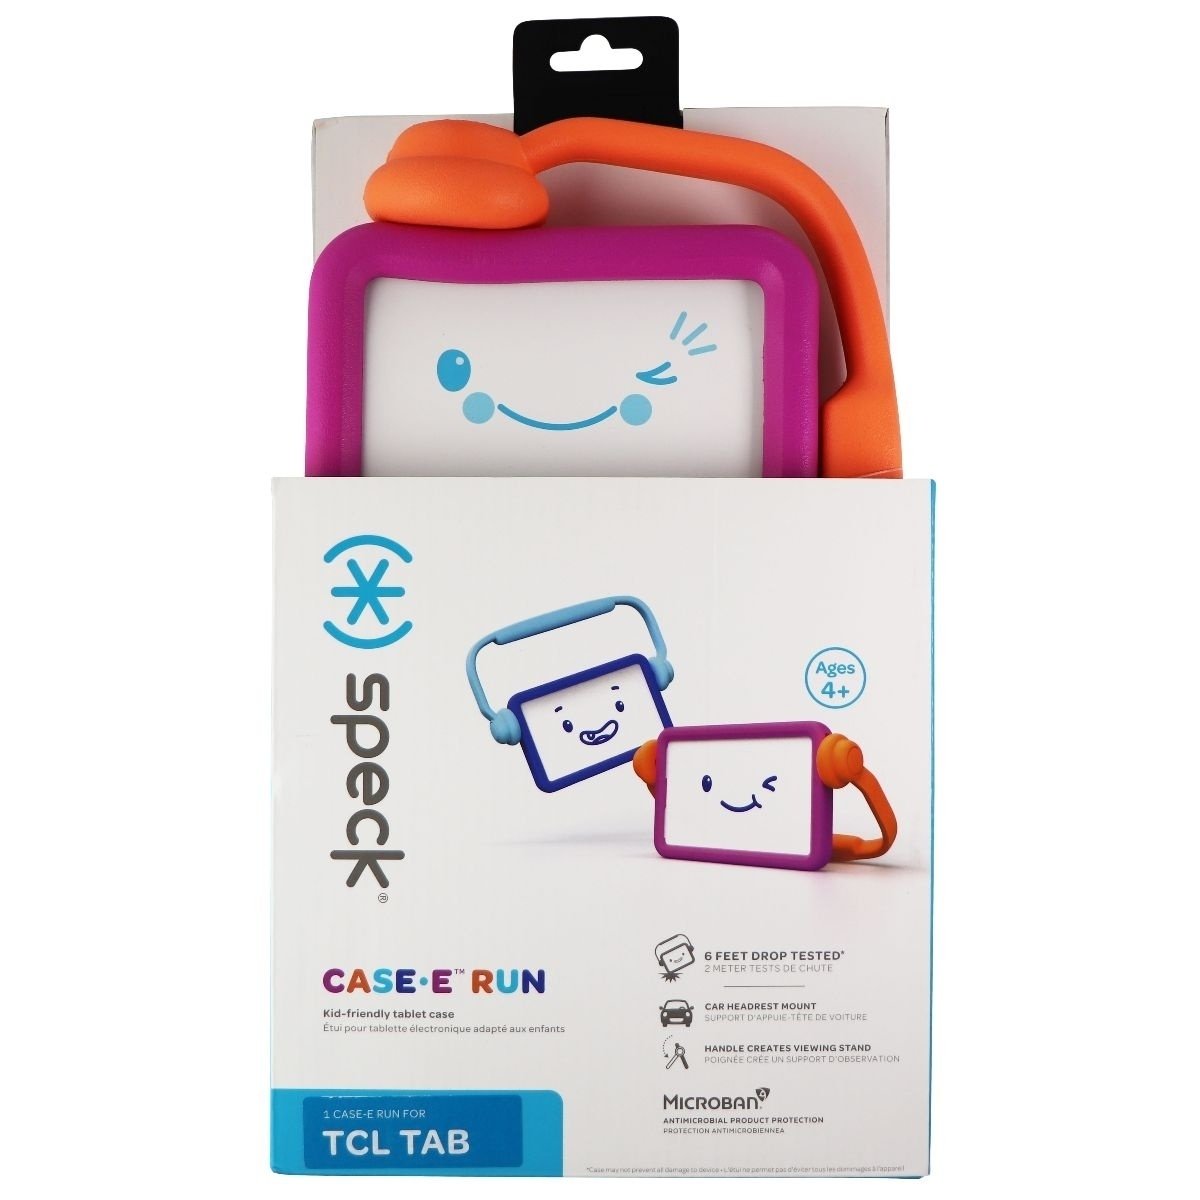 Speck Case-E Run Kid-Friendly Tablet Case For TCL TAB - Purple/Orange